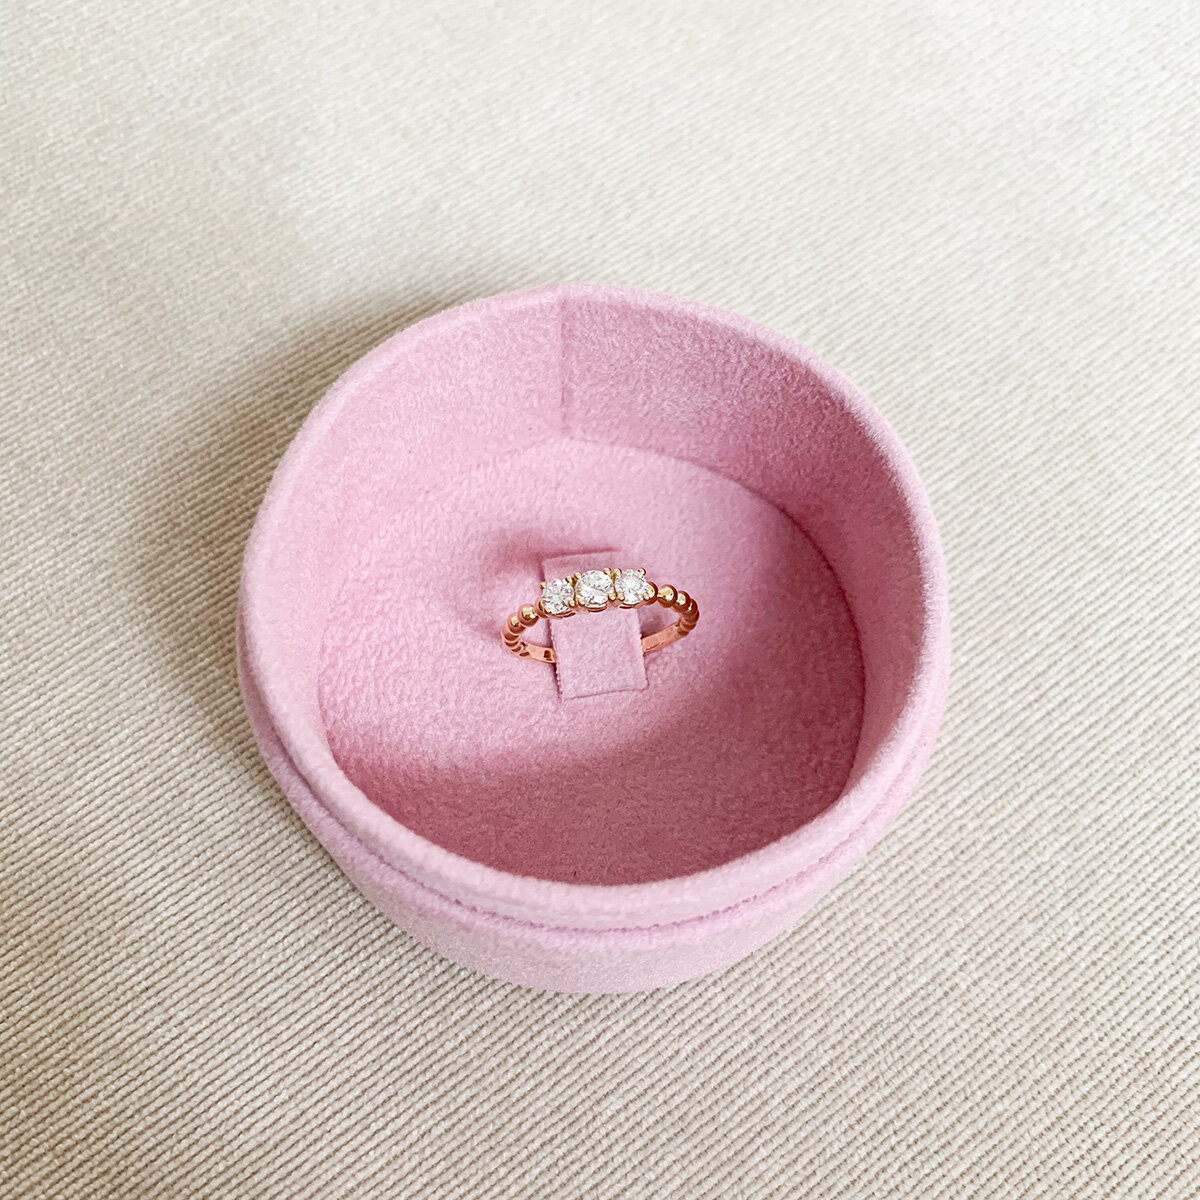 Custom-made engagement ring